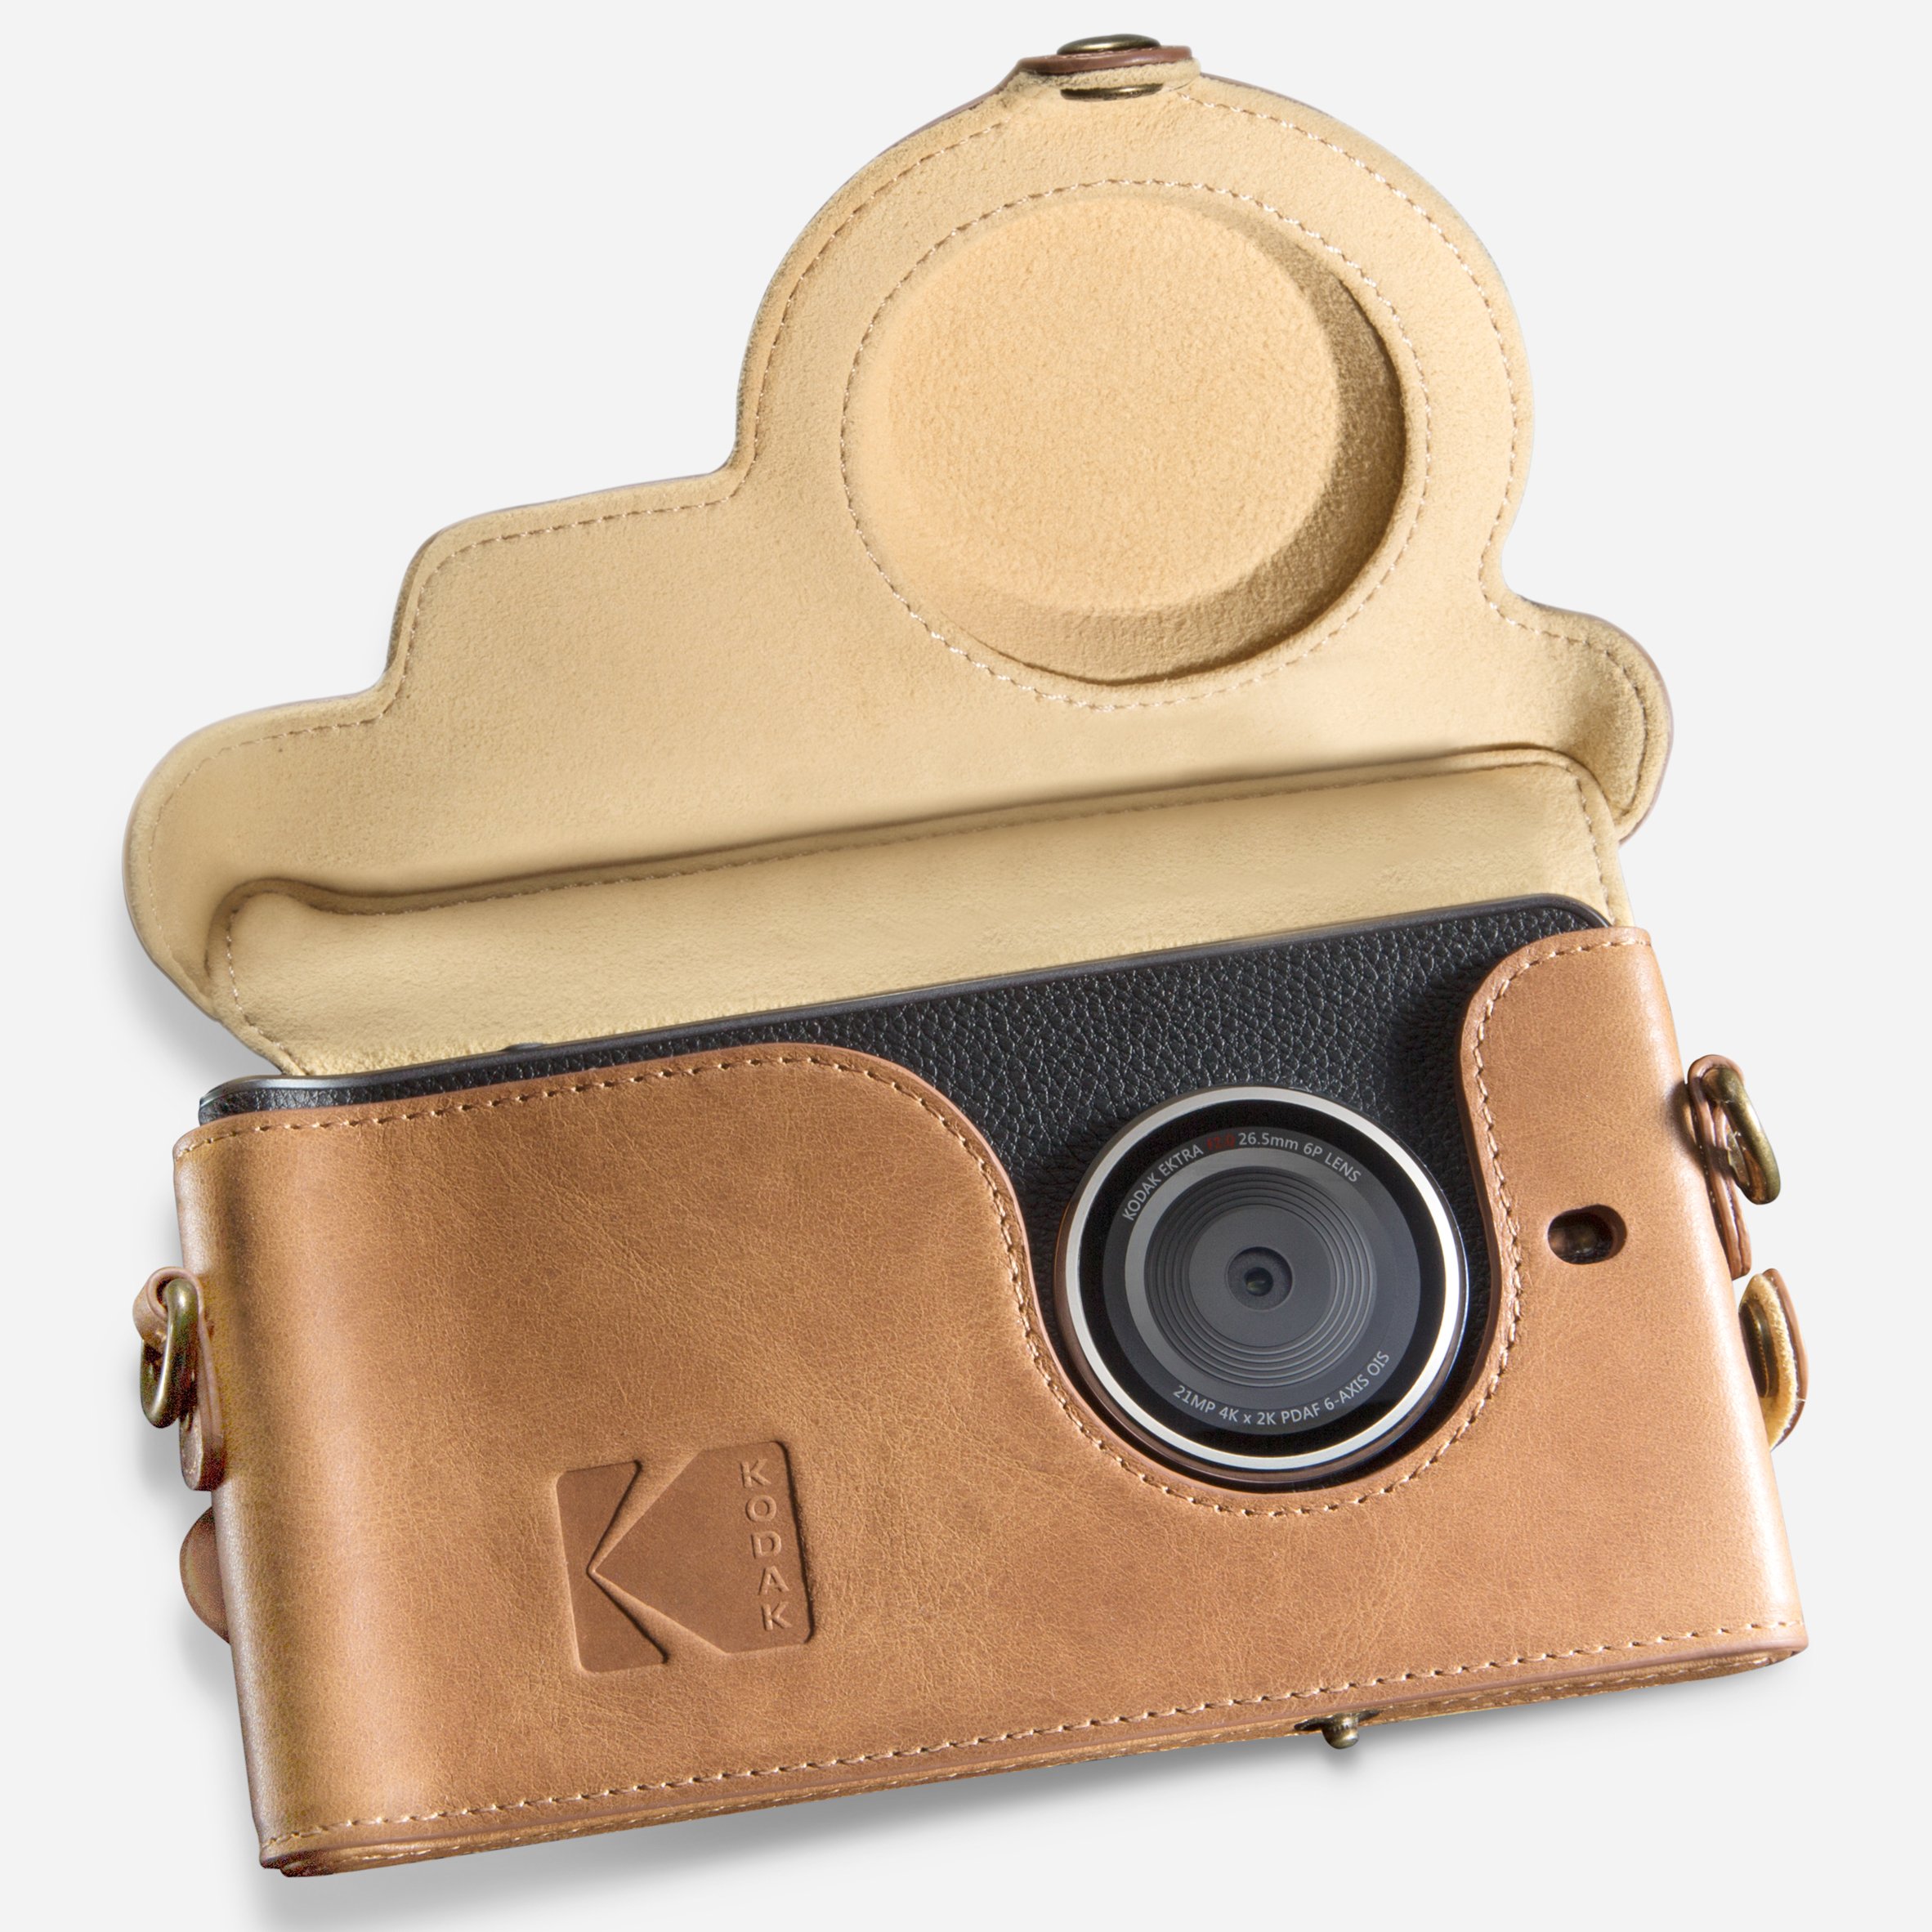 Kodak Ektra smartphone by Eastman Kodak Company and Bullitt Group